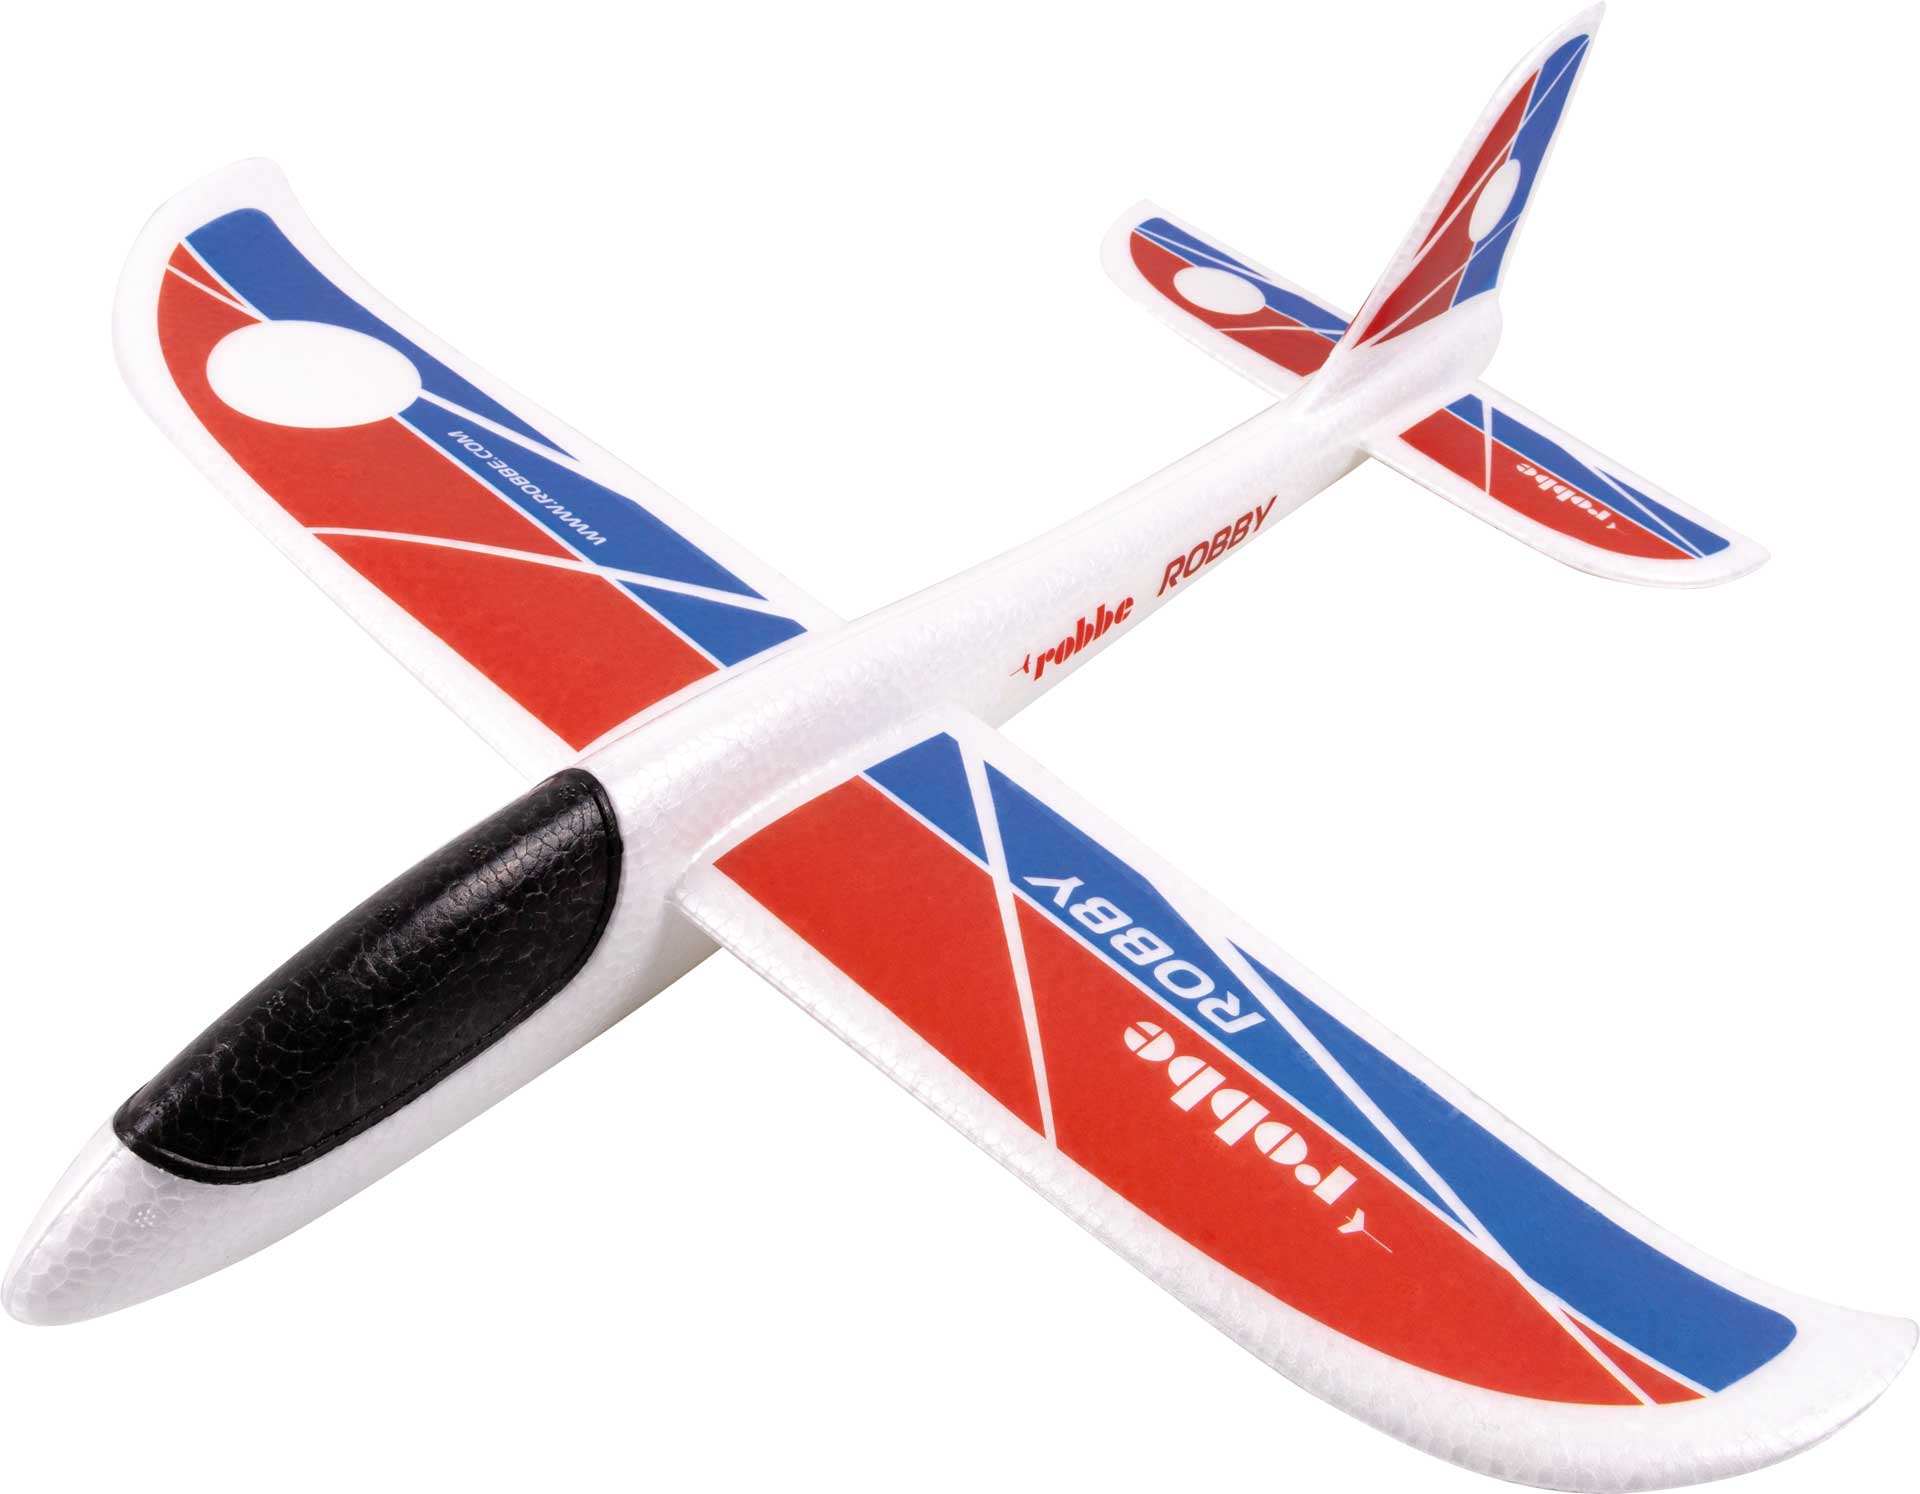 Robbe Modellsport "Robby" EPP hand launch glider 480mm